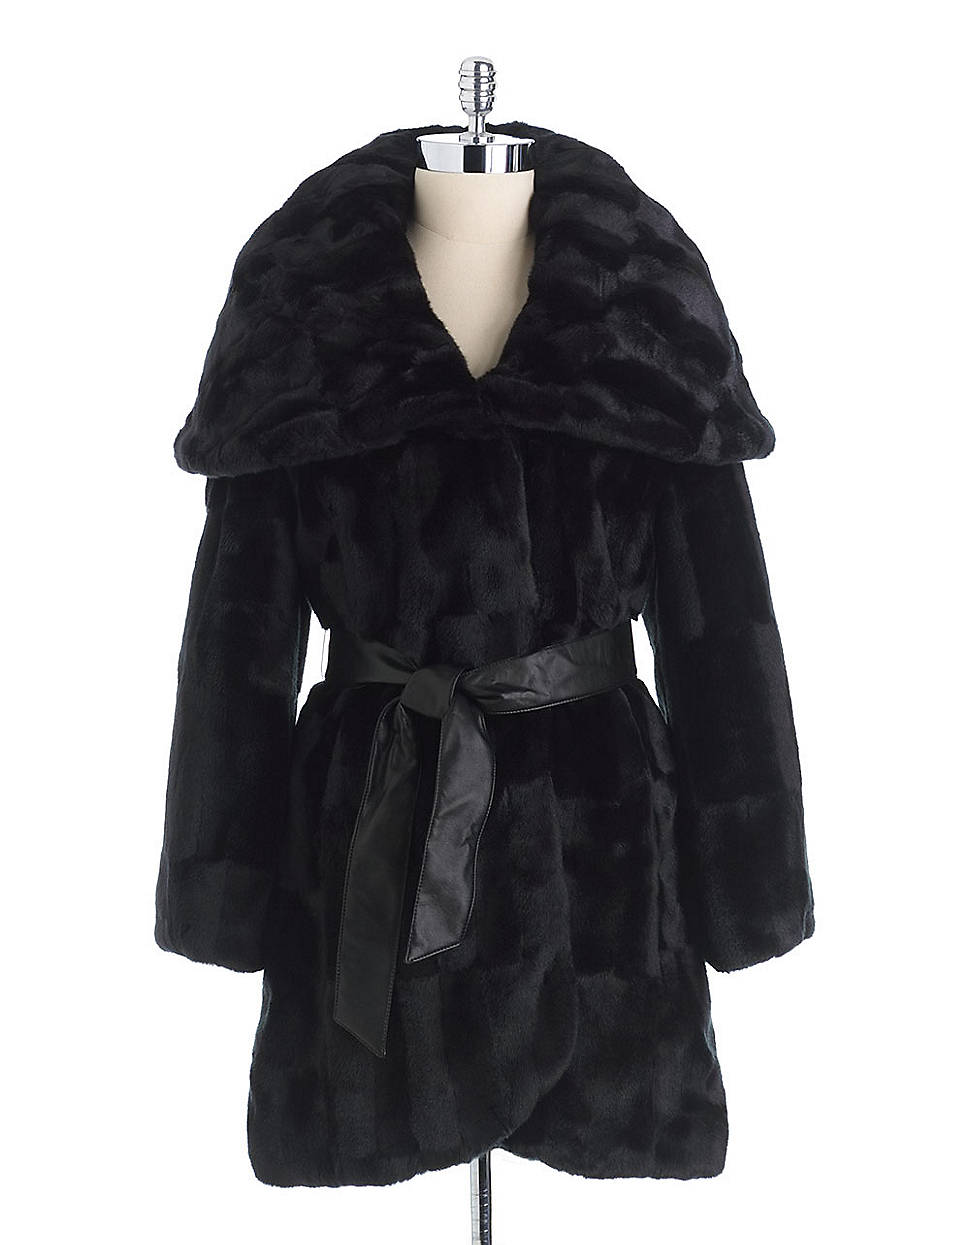 Lyst - T tahari Marla Faux Fur Wrap Coat in Black